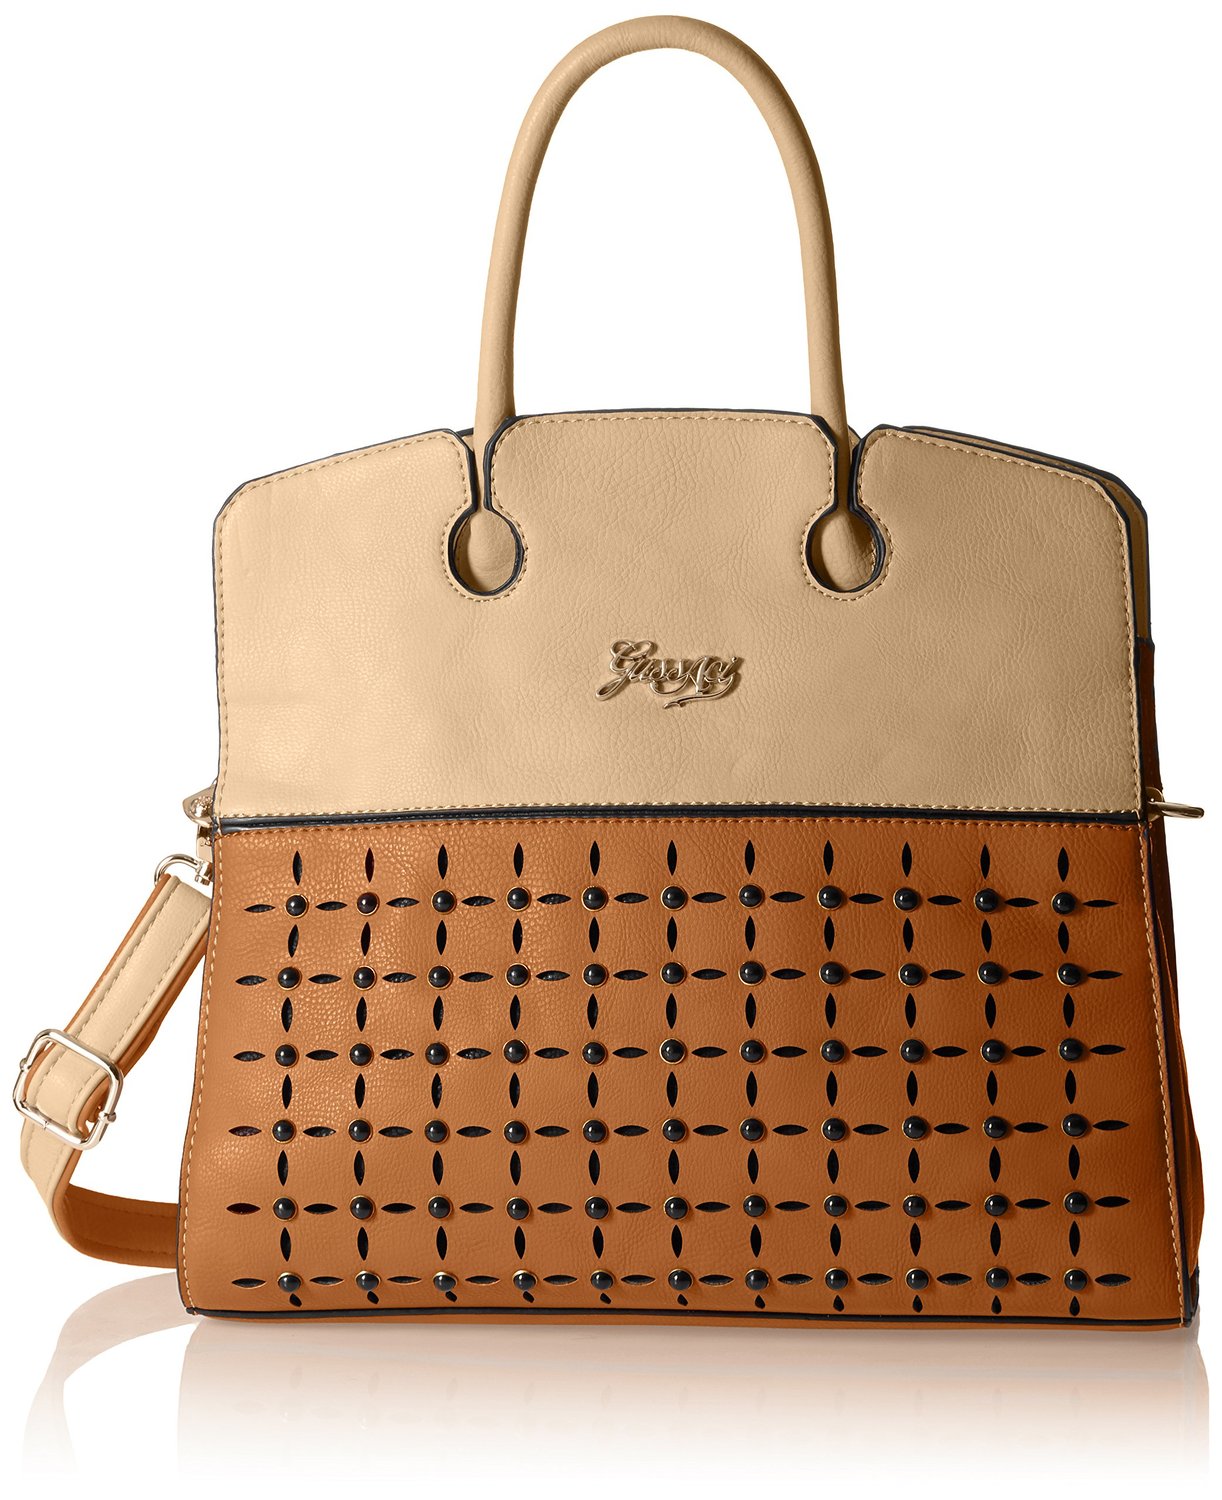 gussaci italy womens handbag